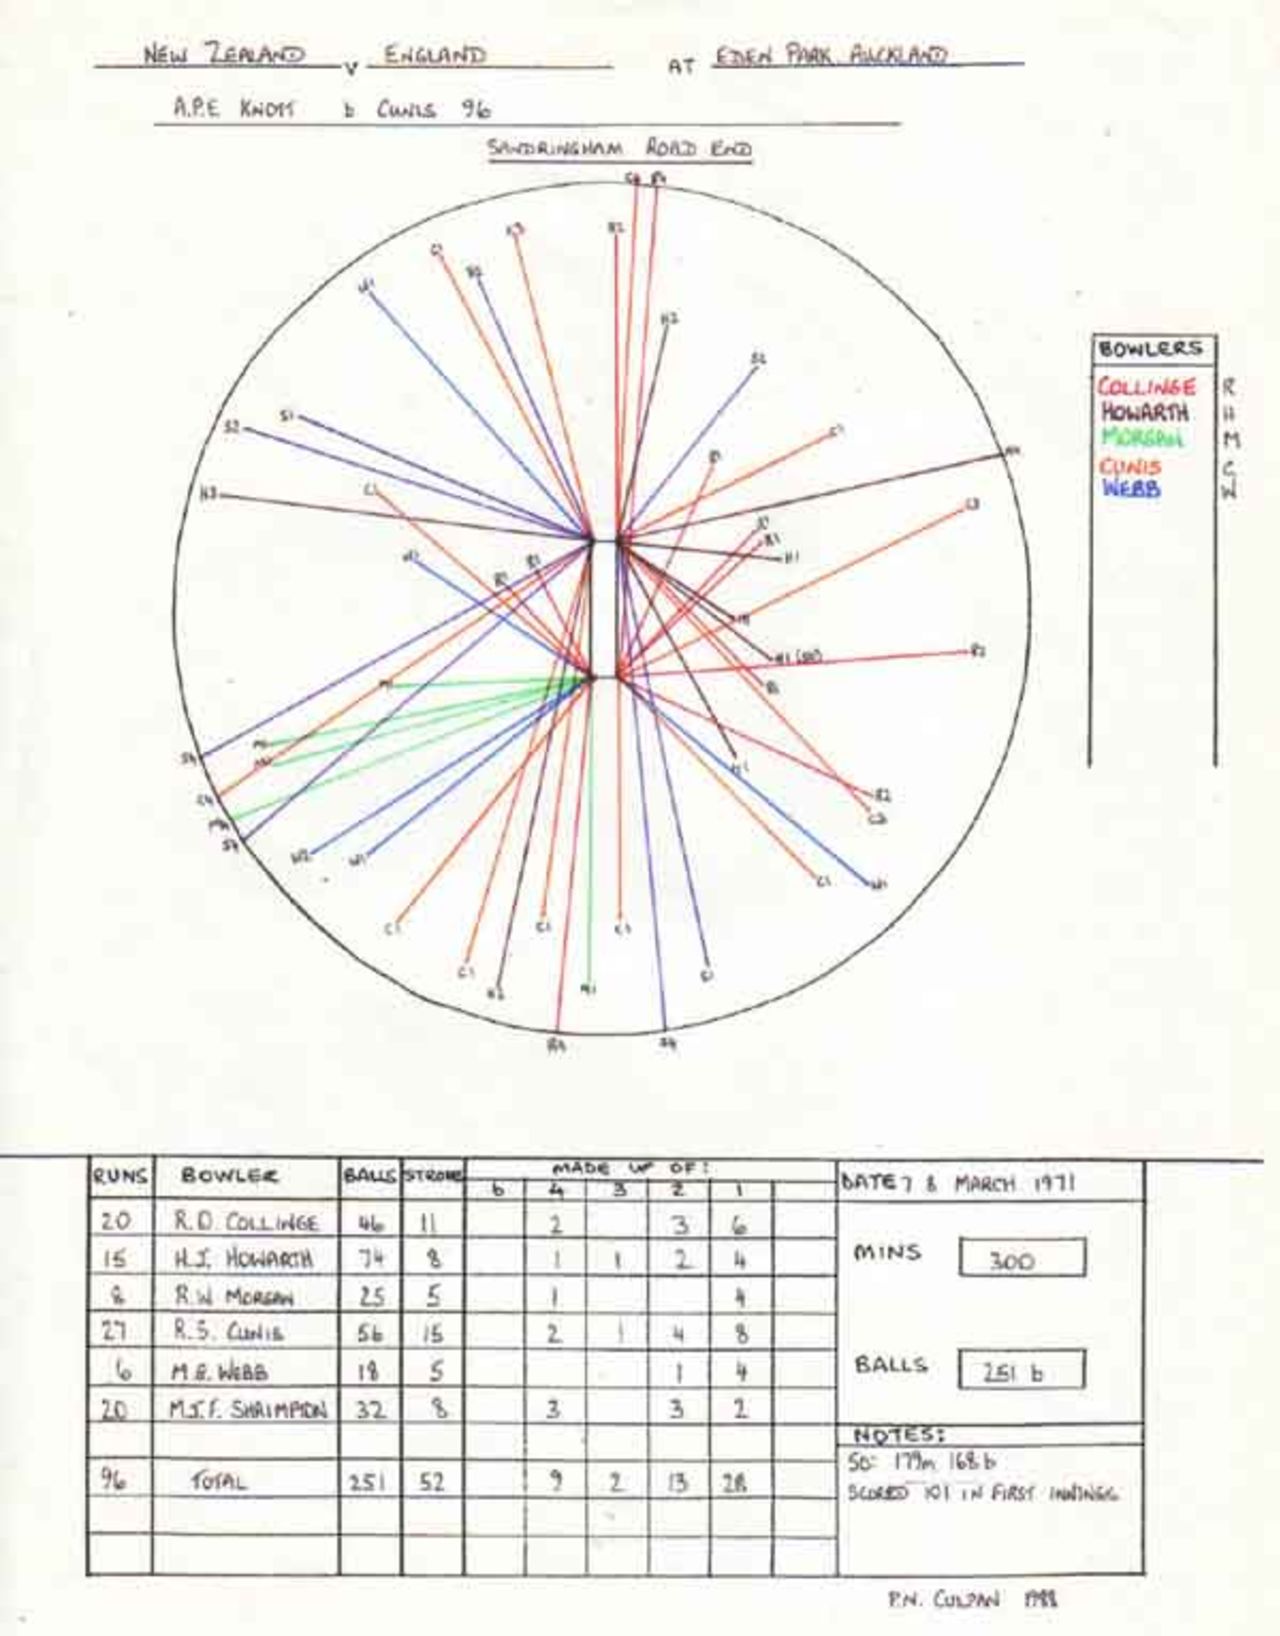 Wagon Wheel of Alan Knott's 96 v New Zealand, Eden Park, Auckland 7-8 March 1971